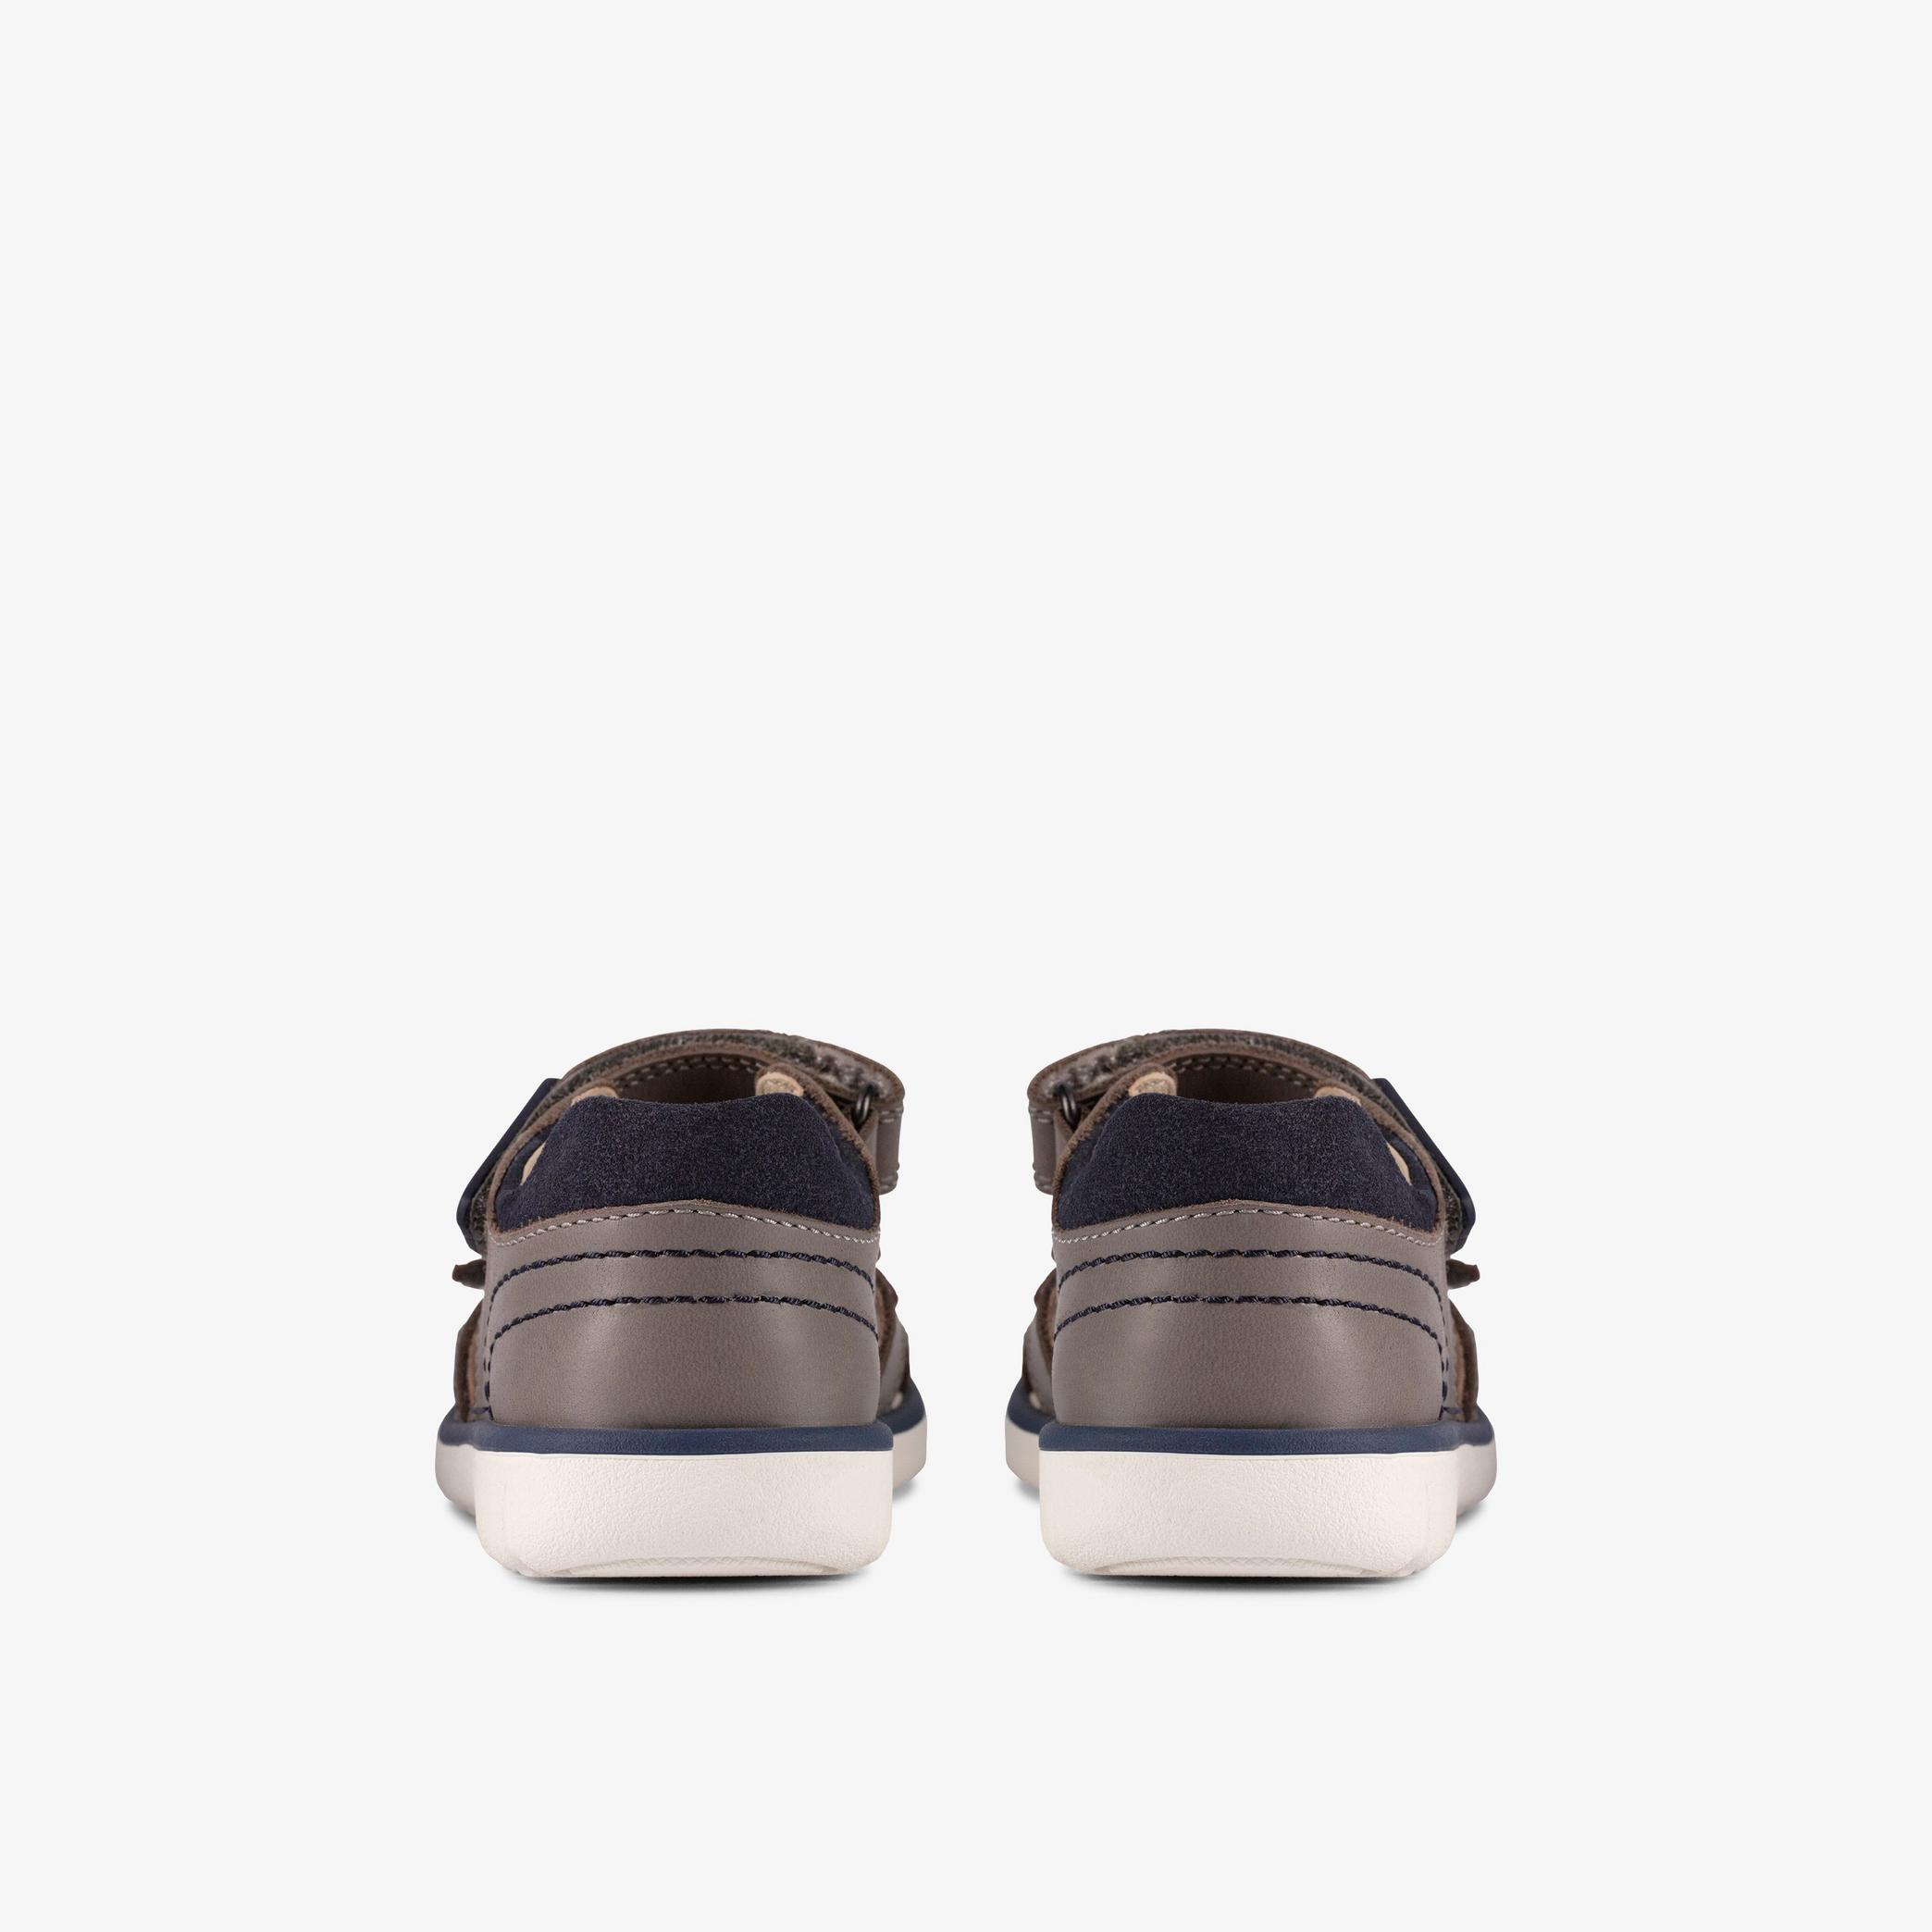 BOYS Roam Surf Toddler Grey Combination Flat Sandals | Clarks Outlet